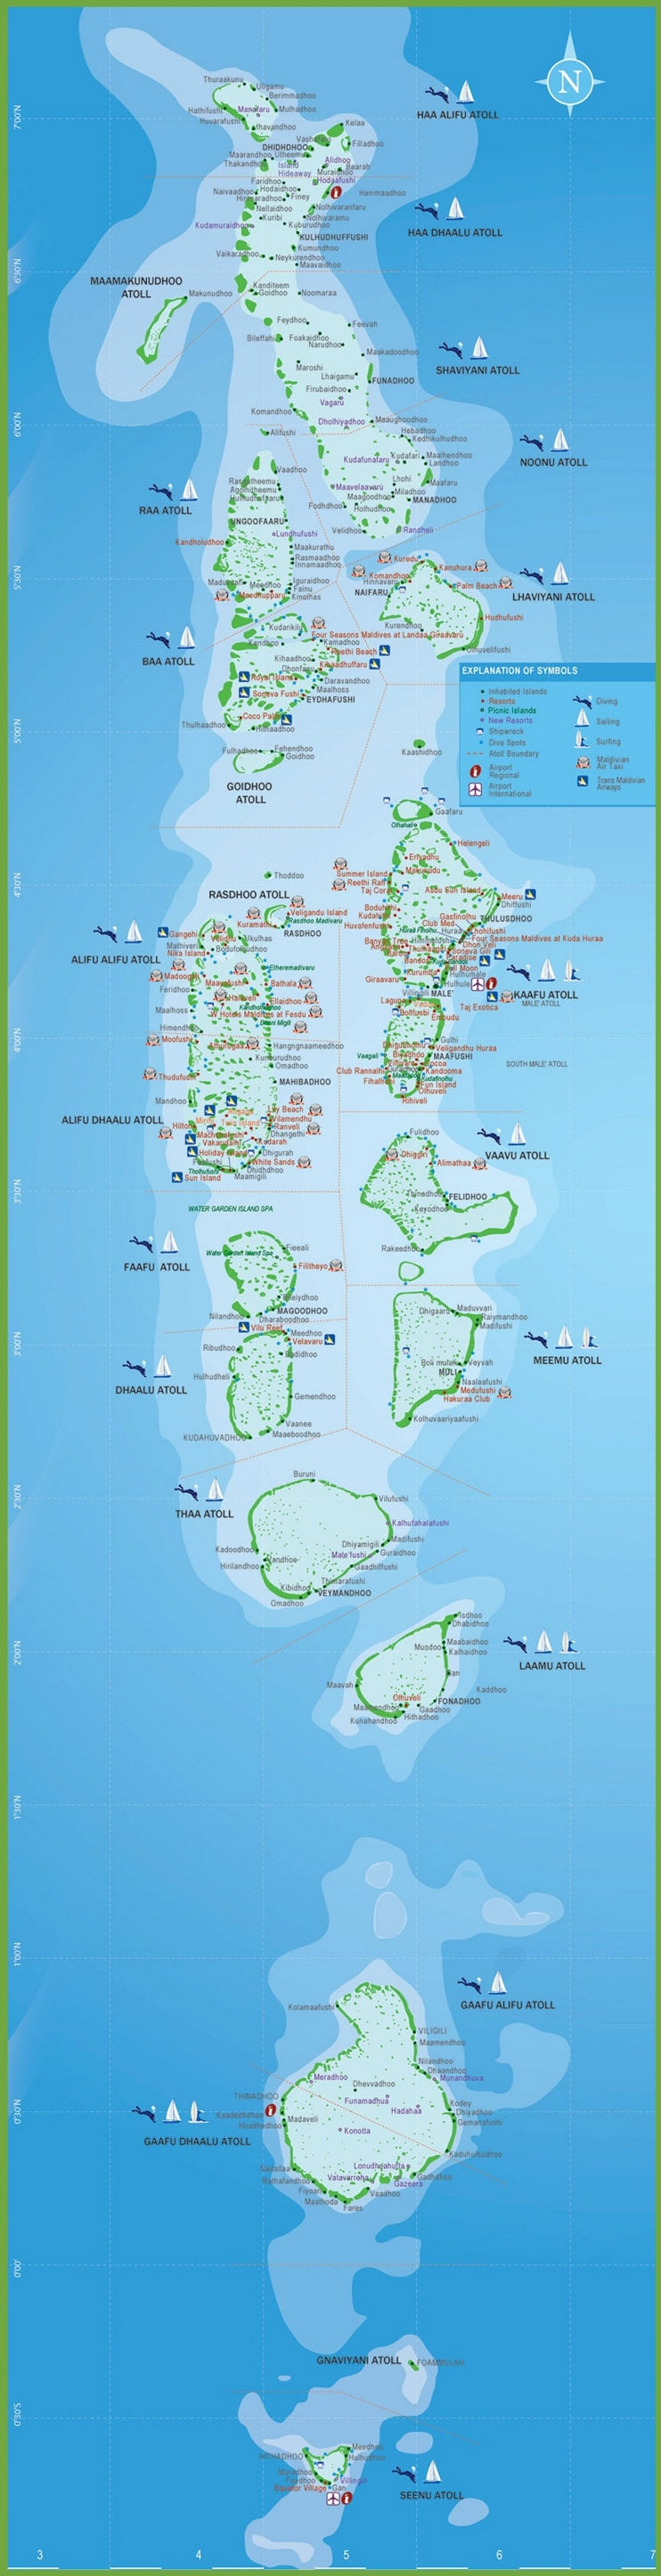 Maldives hotel and resort map